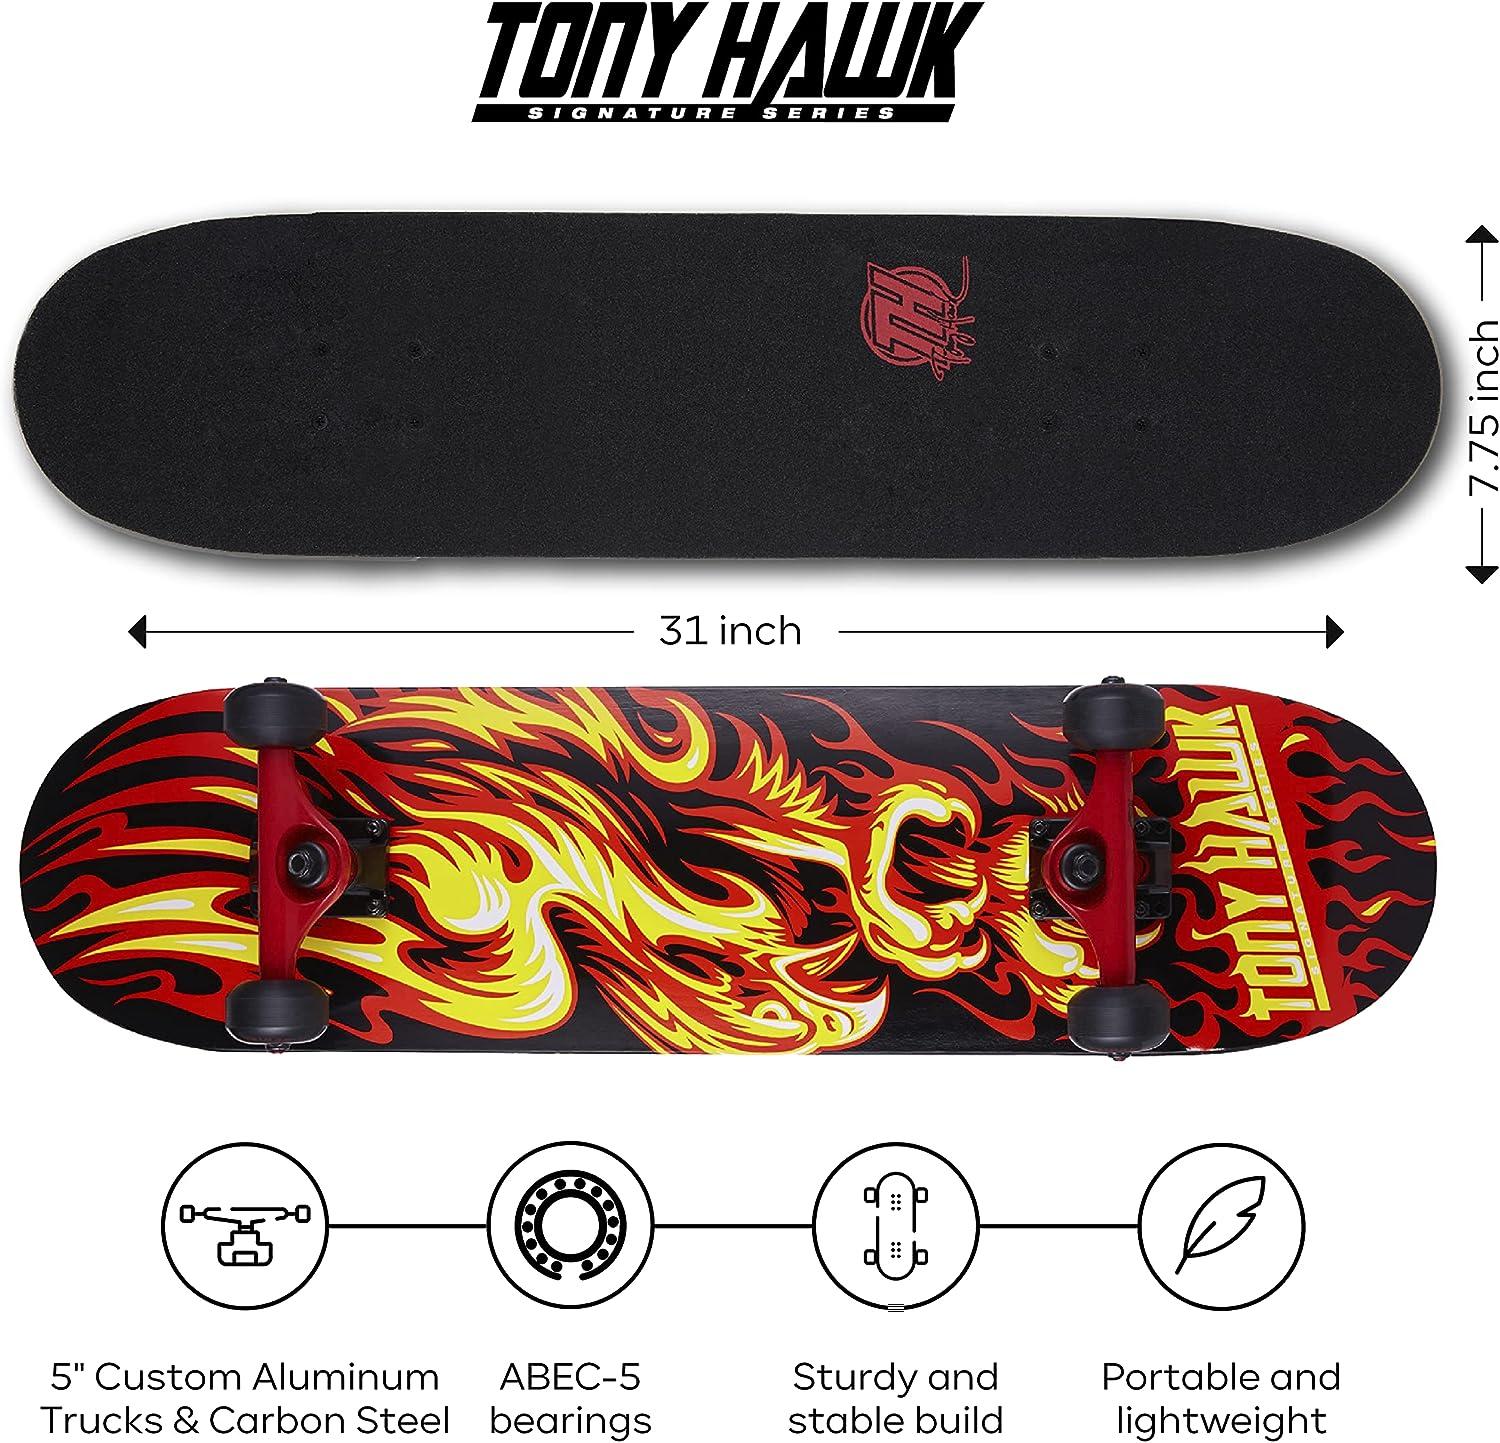 Tony Hawk 31 Inch Skateboard, Tony Hawk Signature Series 2, 9-Ply Maple  Deck Skateboard for Cruising, Carving, Tricks and Downhill